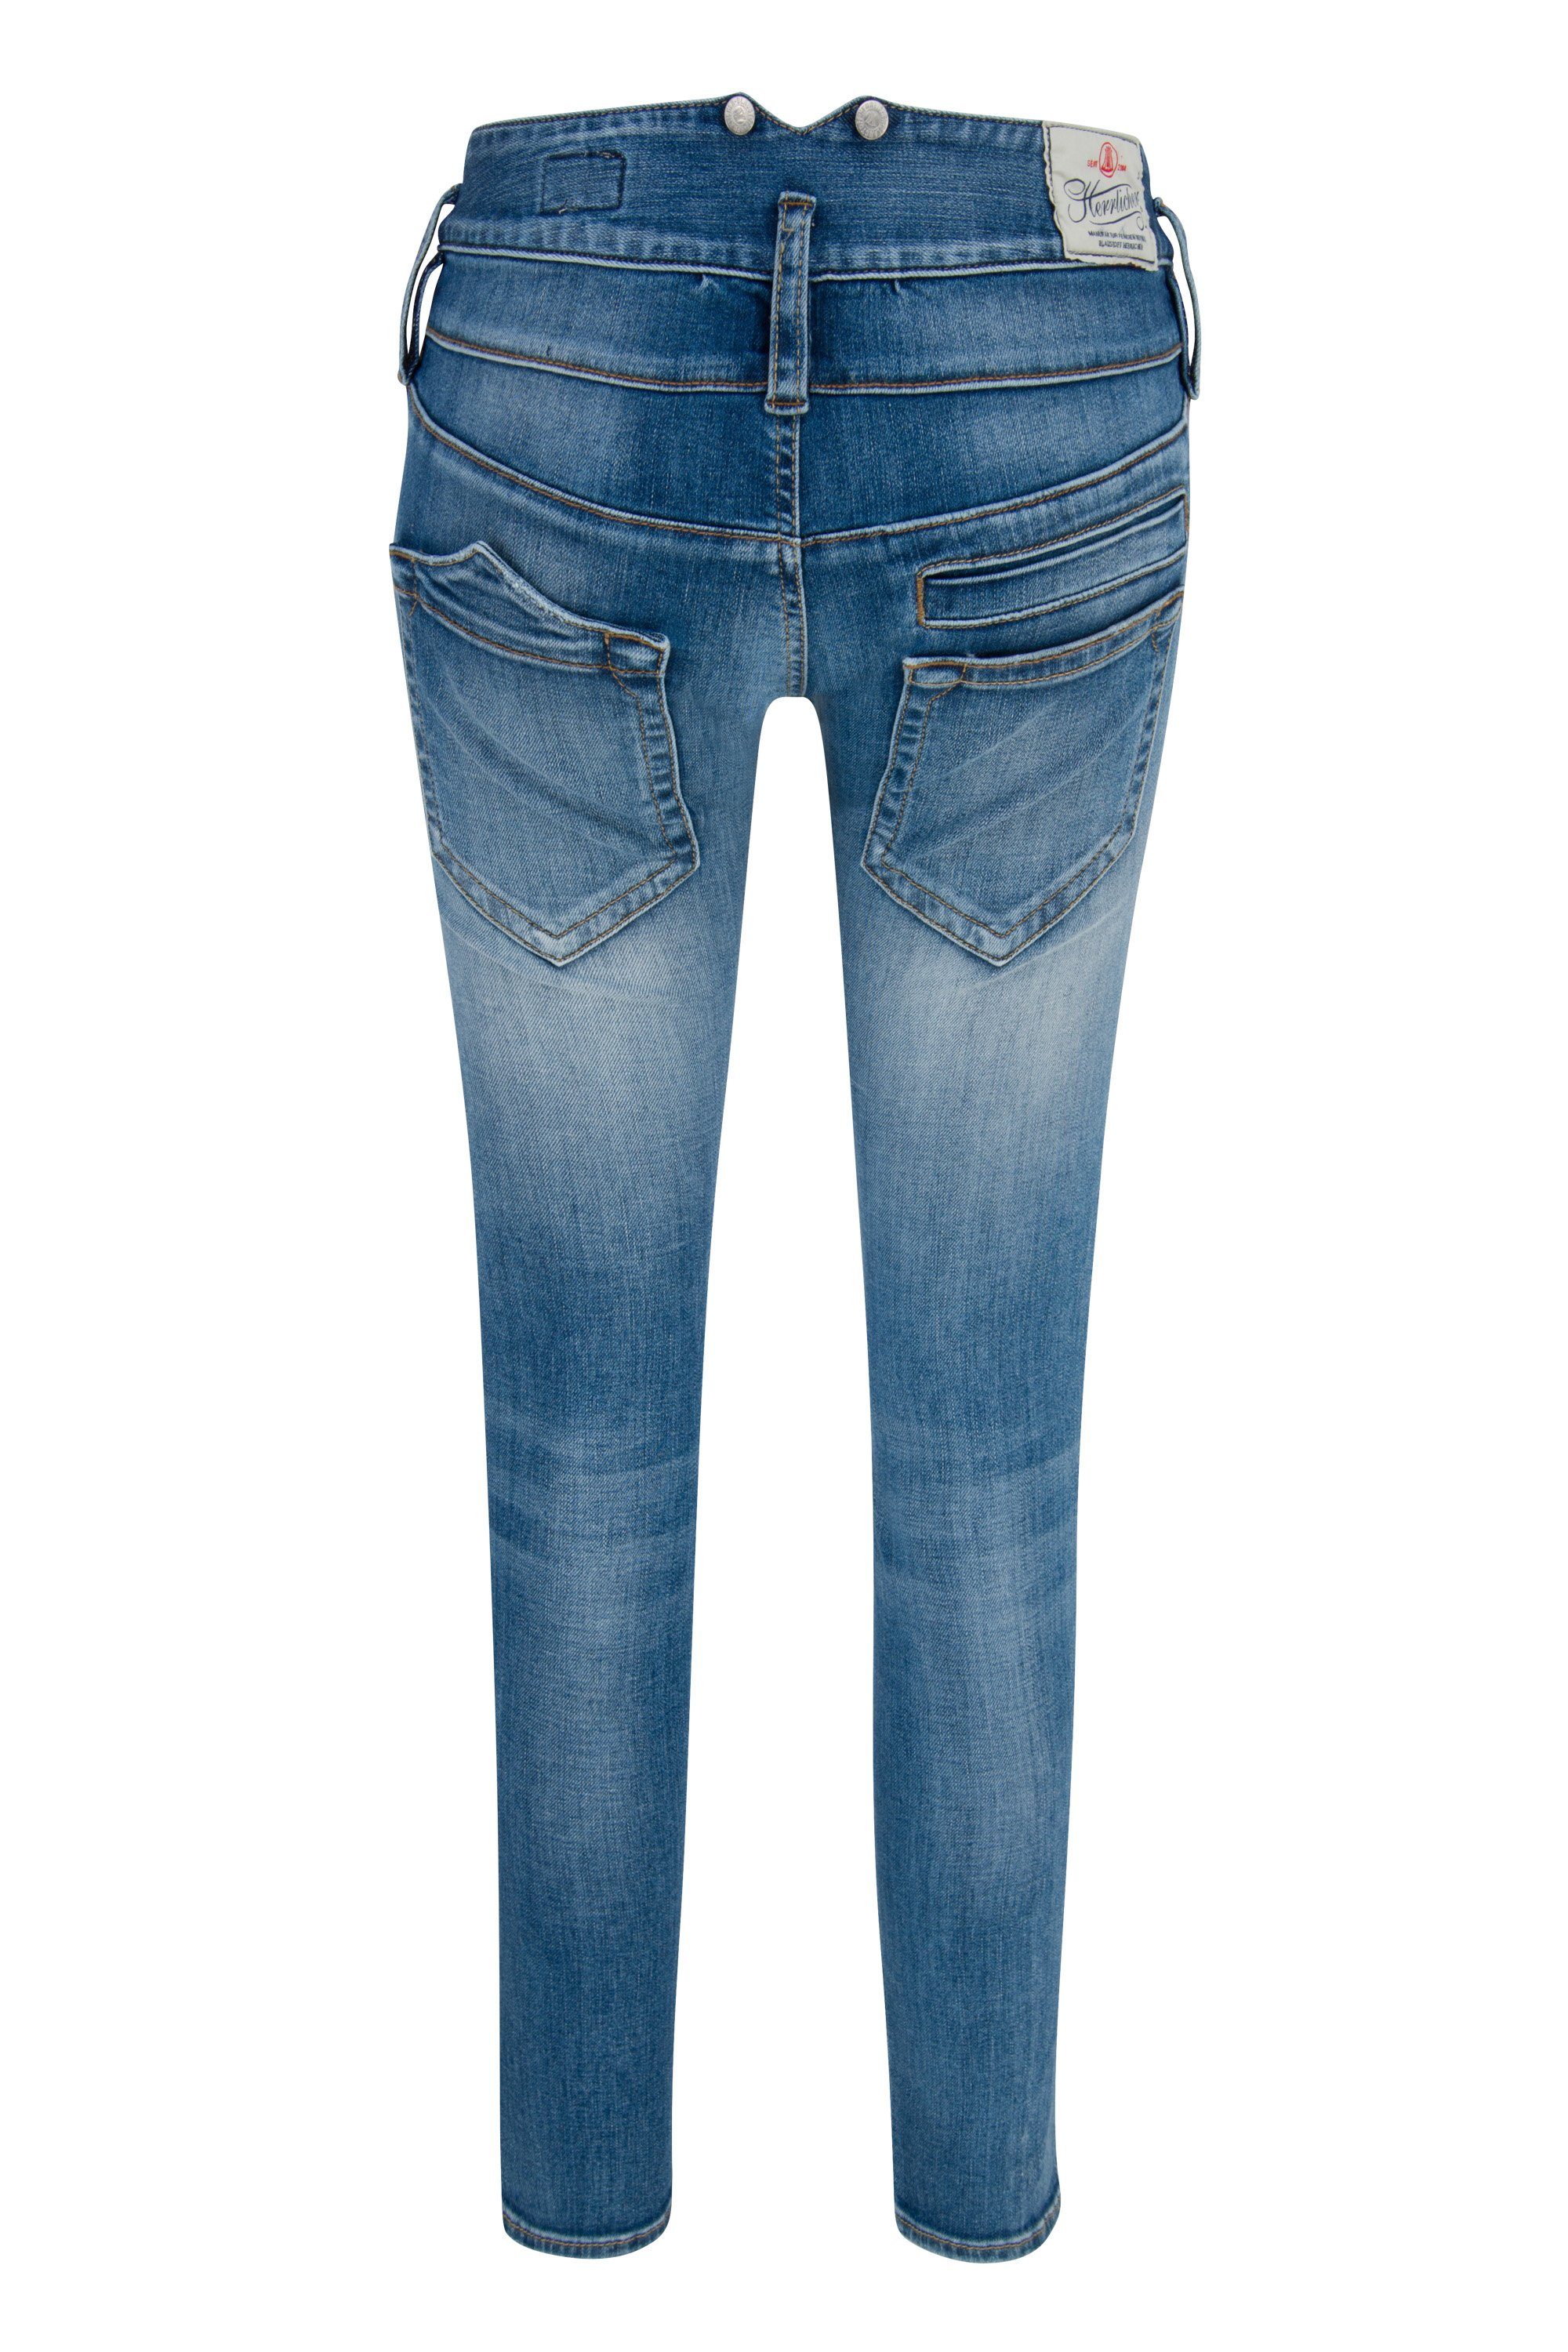 Organic faded Denim Slim blue 5303-OD100-666 HERRLICHER PITCH Herrlicher Stretch-Jeans